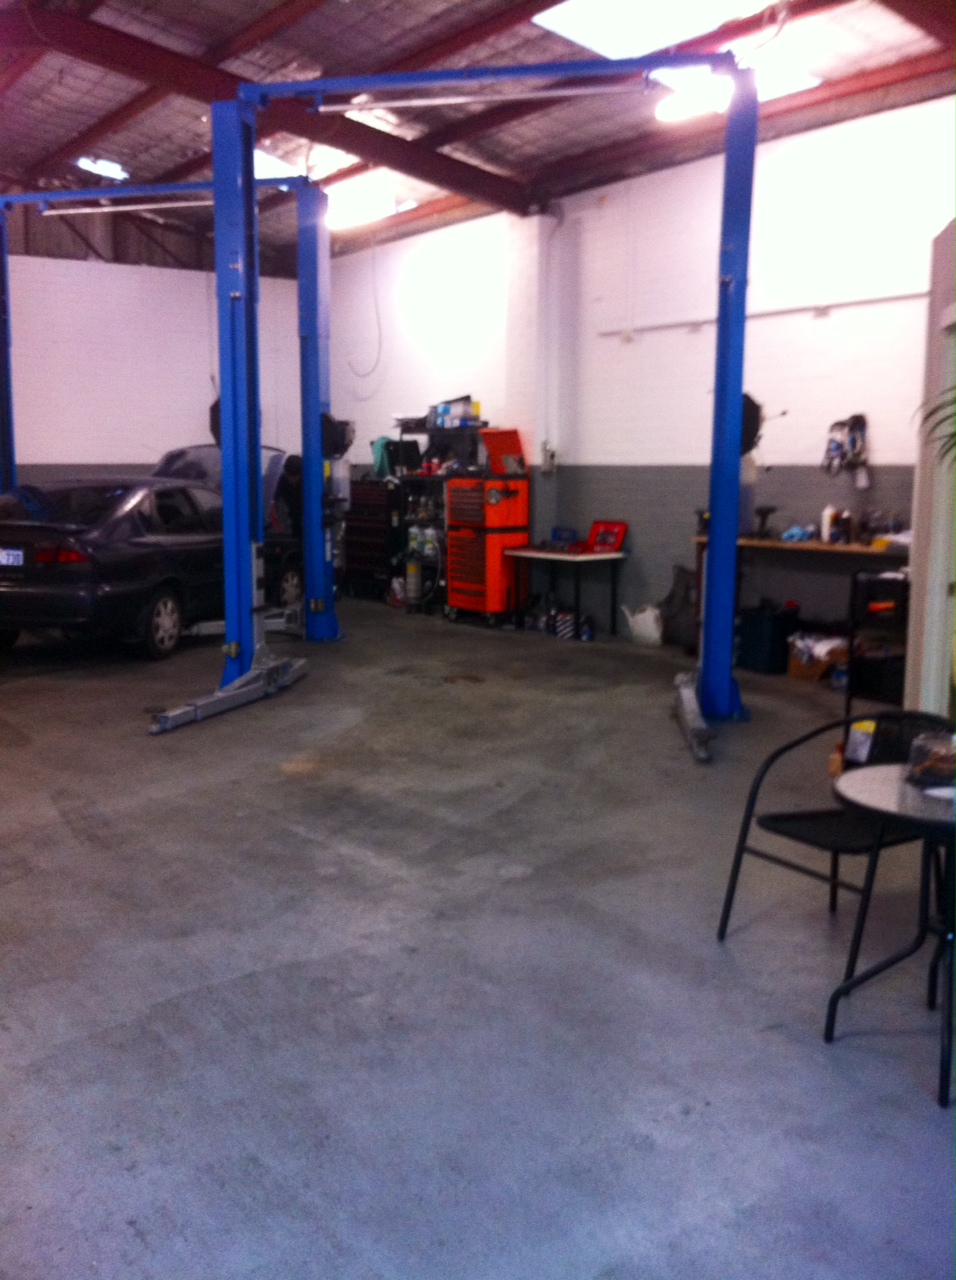 Ok Car Centre | car repair | 1 Whyalla St, Willetton WA 6155, Australia | 0401606537 OR +61 401 606 537